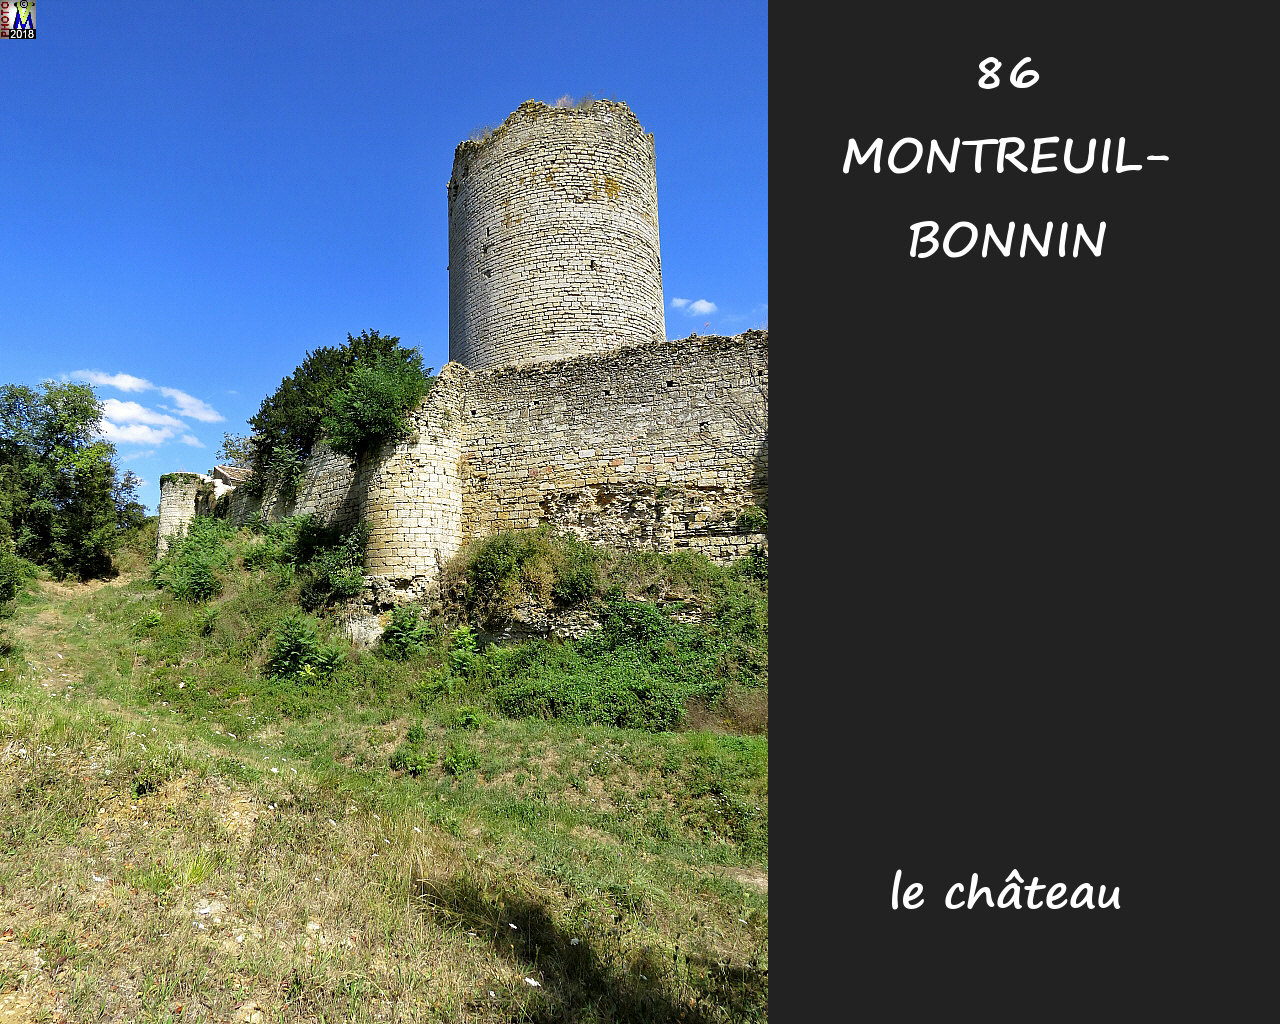 86MONTREUIL-BONNIN_chateau_1012.jpg